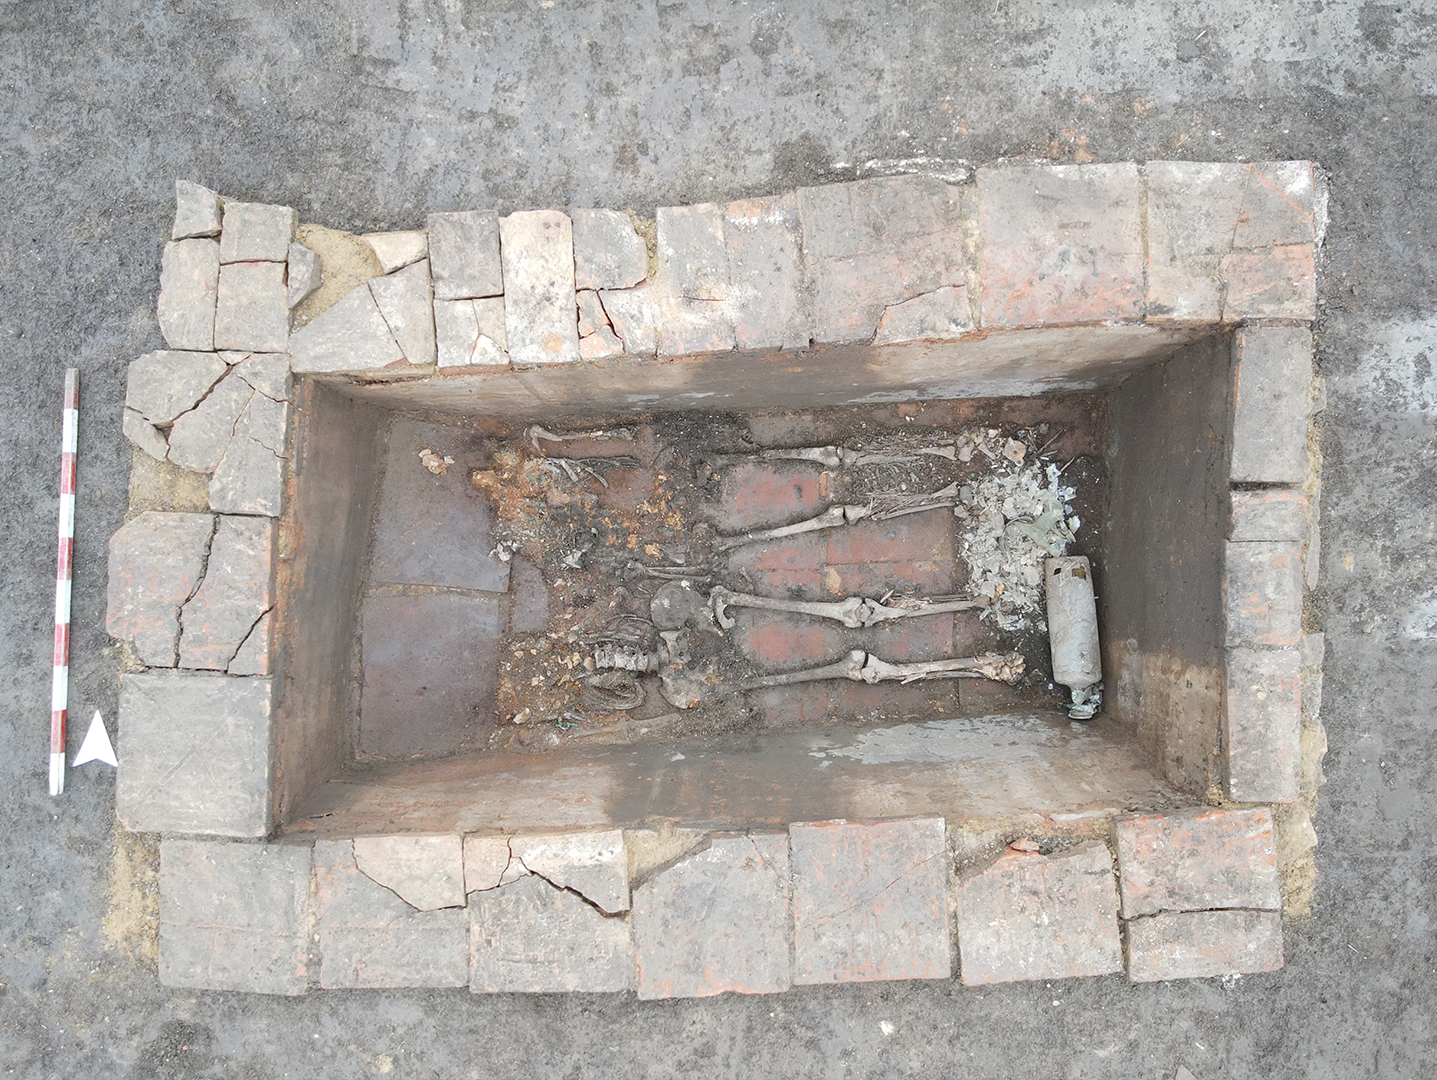 Caracalla medallion found in child’s grave in Bulgaria